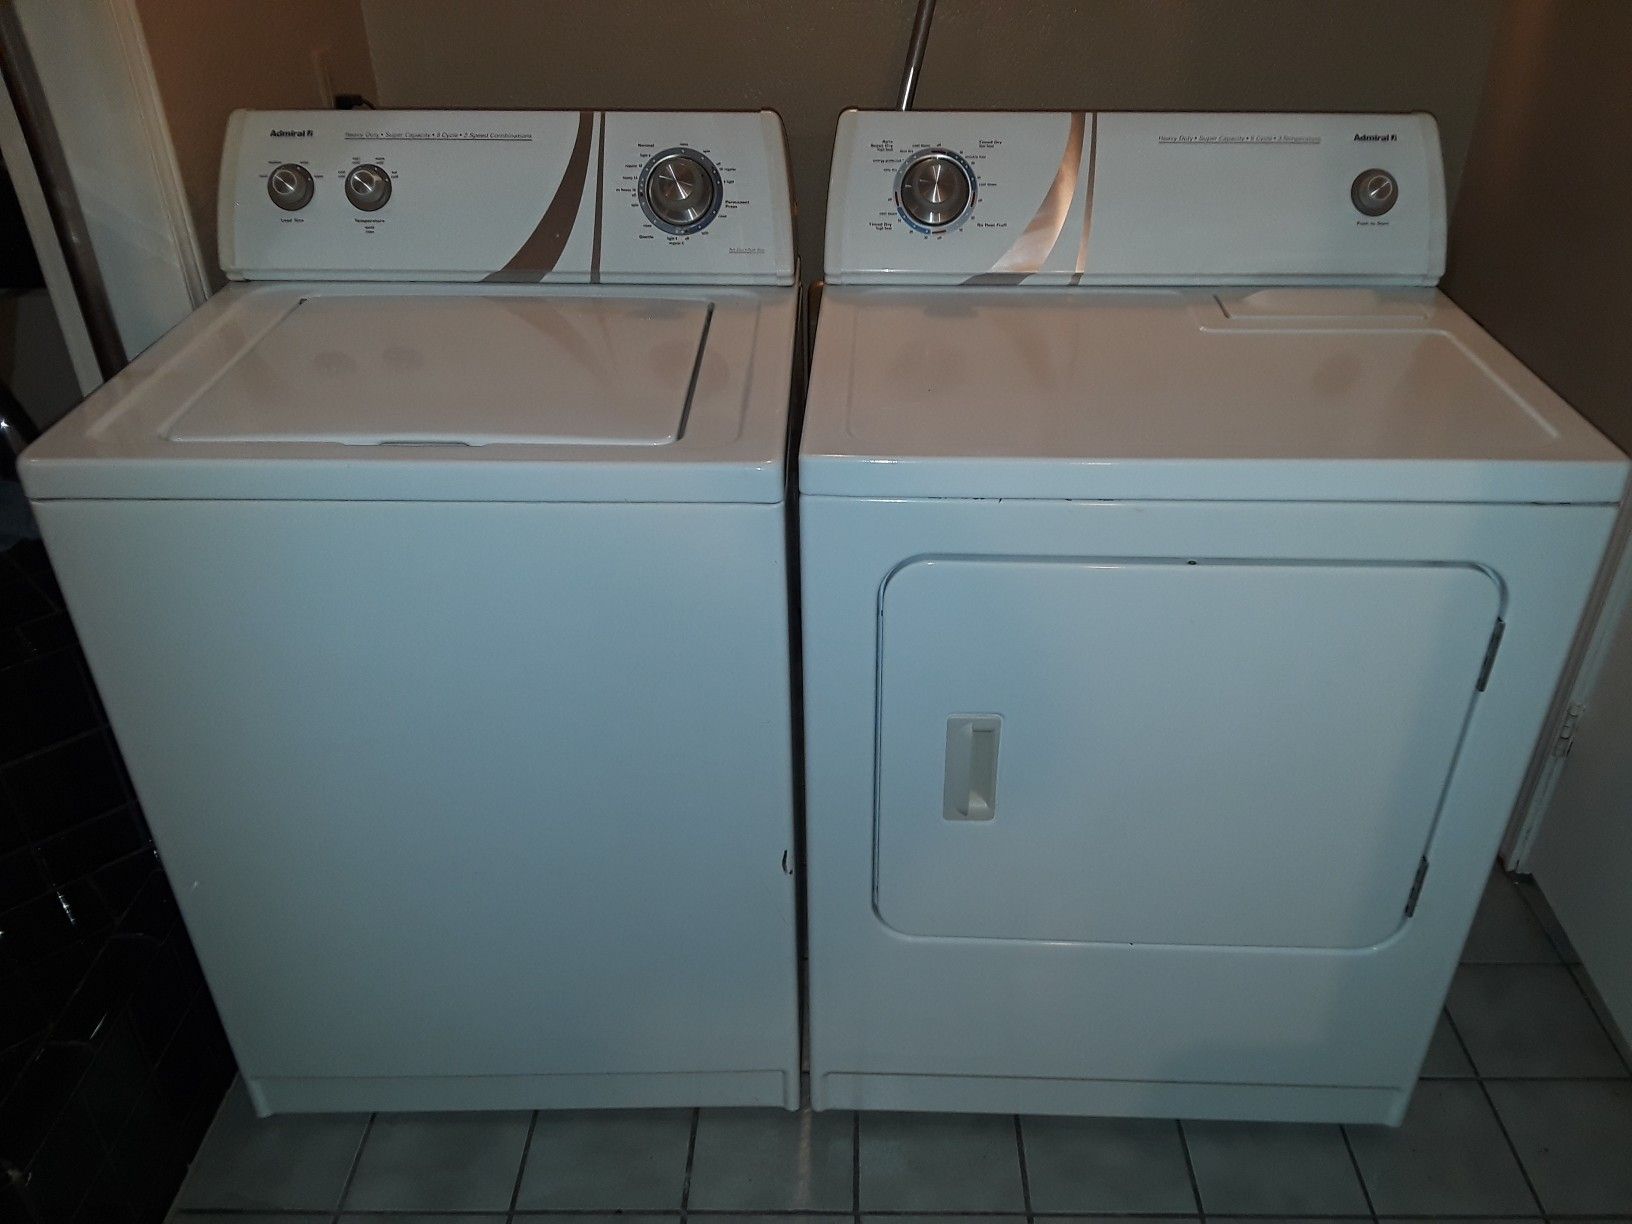 Matching Admiral washer dryer set